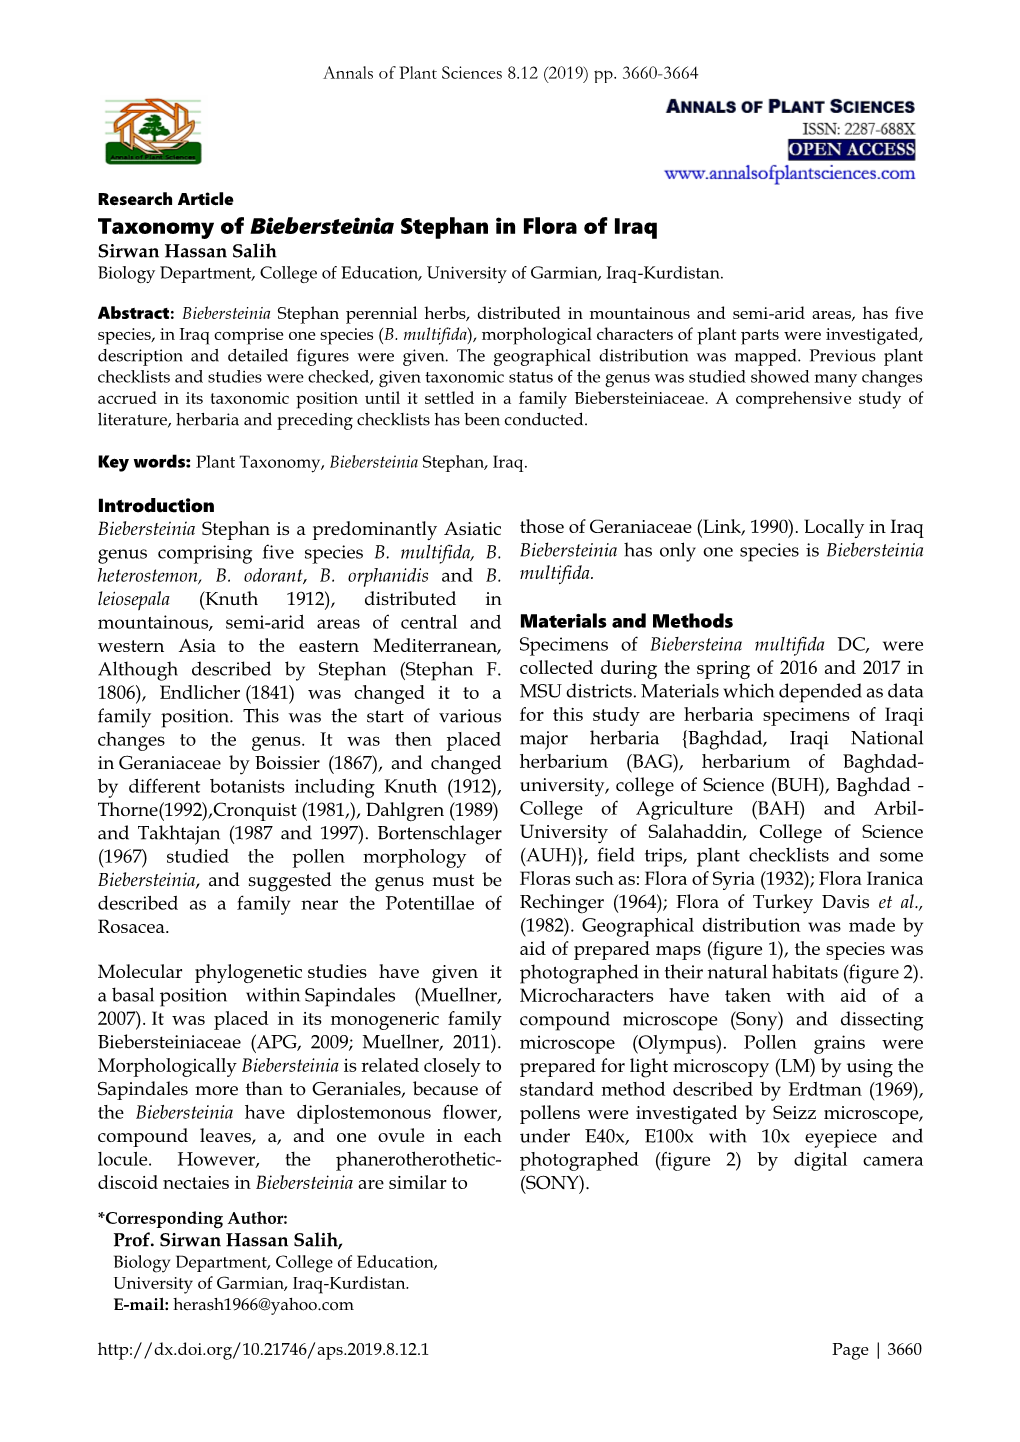 Taxonomy of Biebersteinia Stephan in Flora of Iraq Sirwan Hassan Salih Biology Department, College of Education, University of Garmian, Iraq-Kurdistan